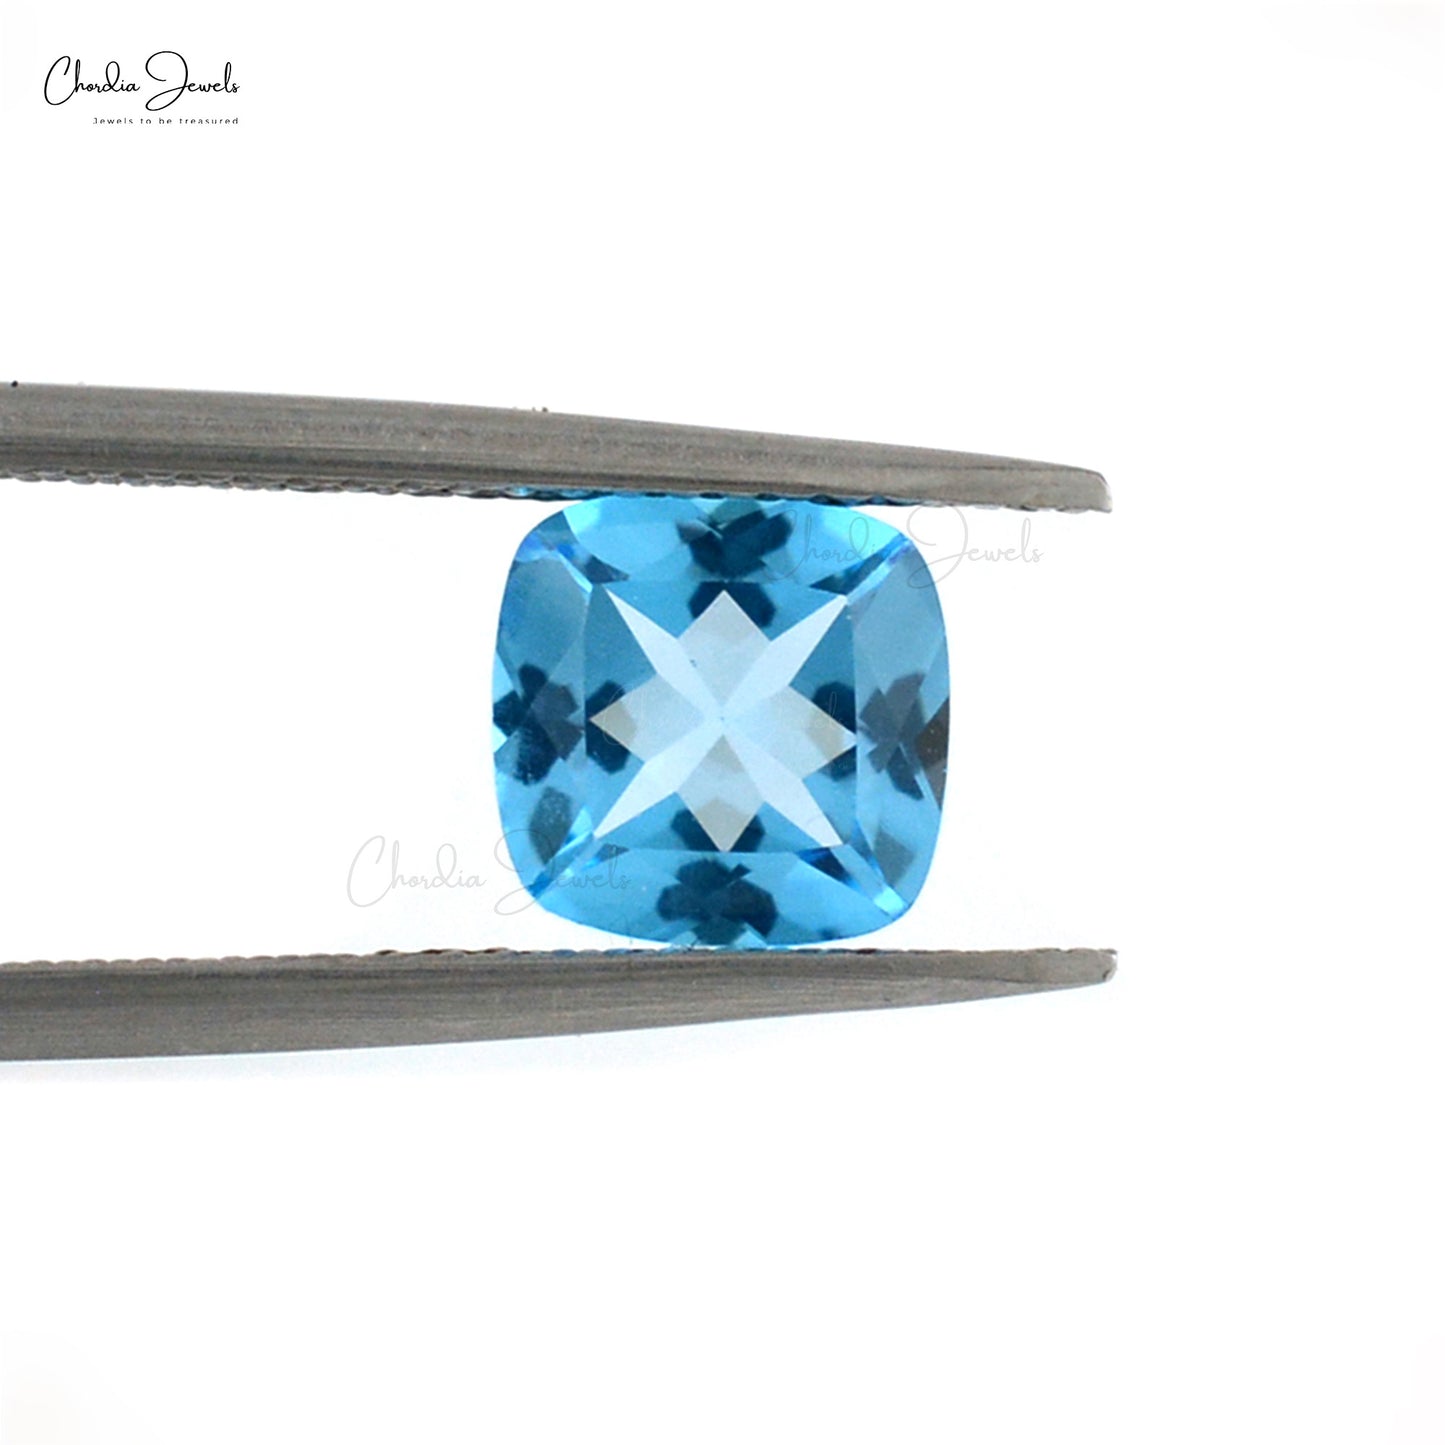 Natural Blue Topaz 5MM Faceted Gemstone December Birthstone for Sale, 1 Piece